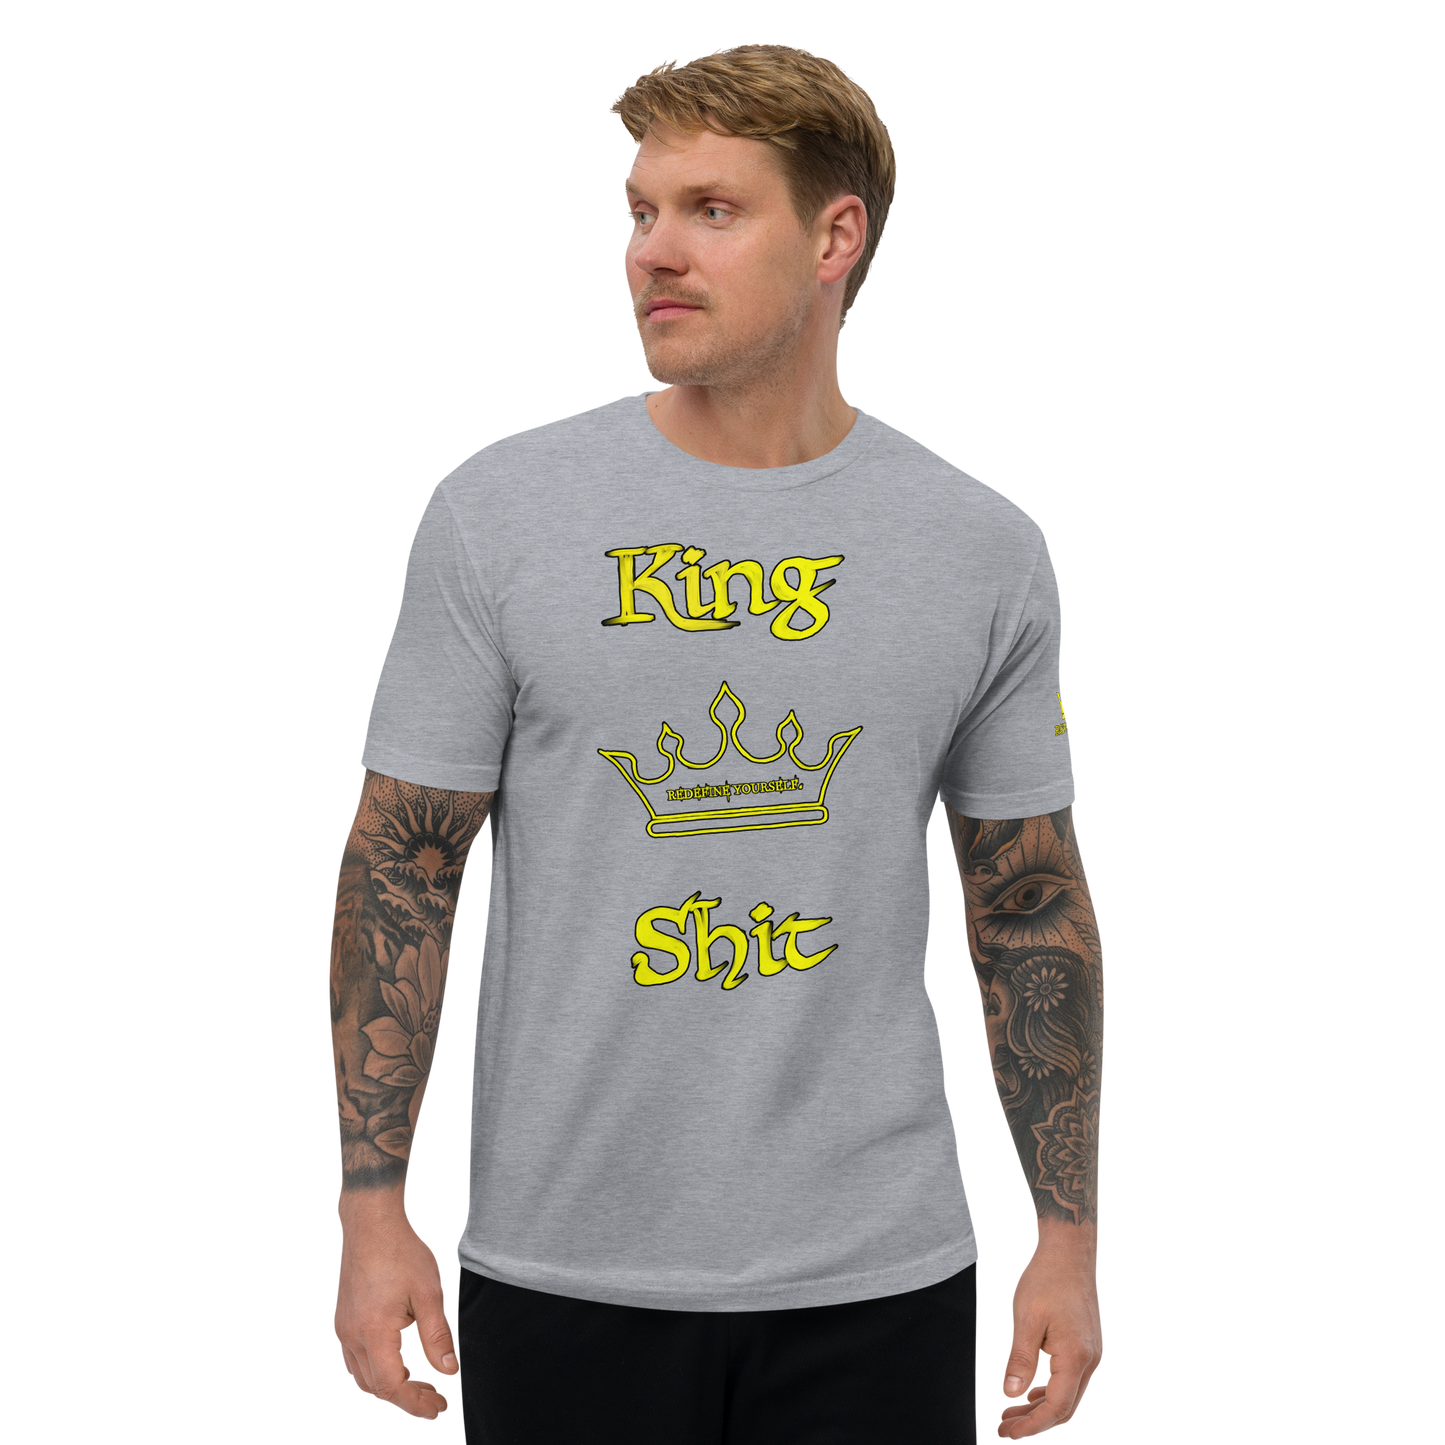 Royal Armor - King Shit T-shirt